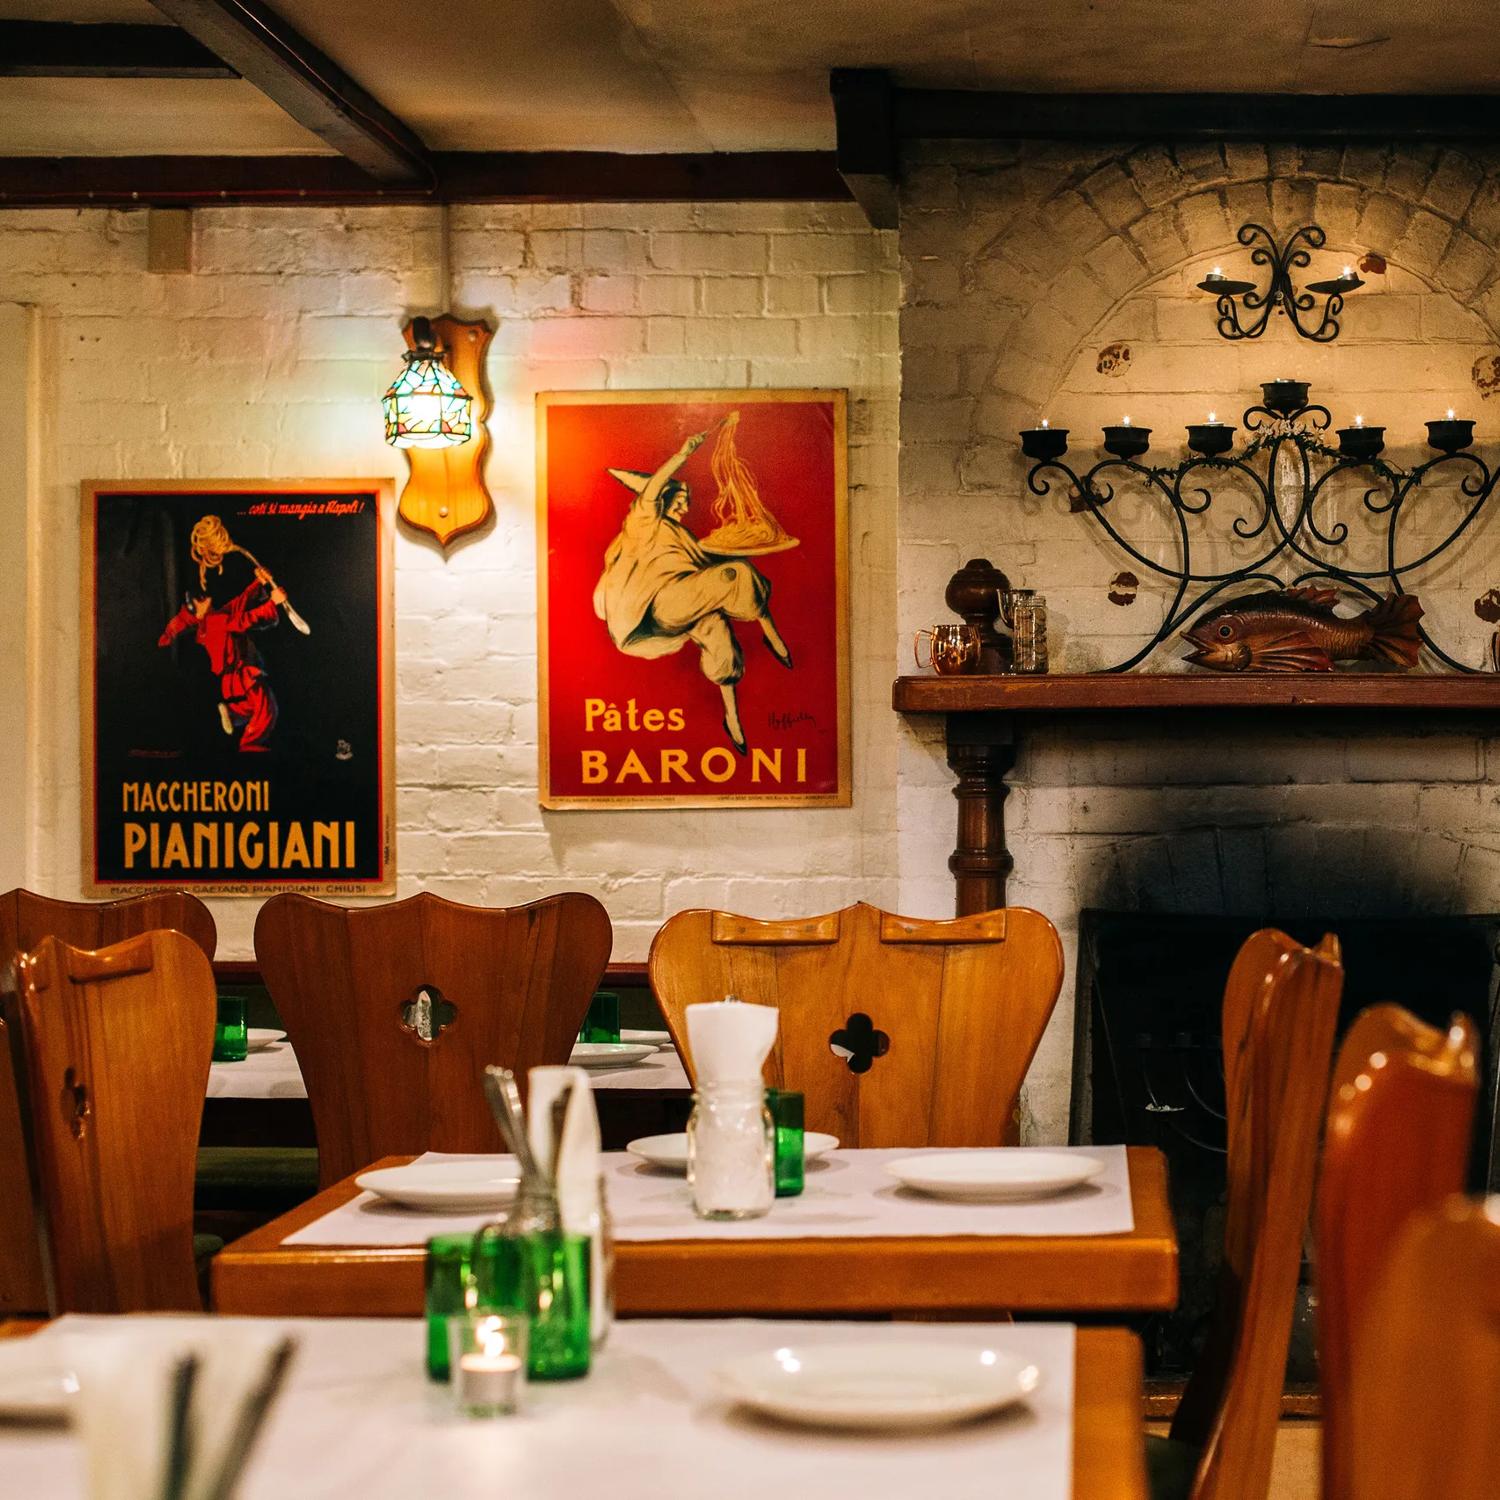 Inside Cicio Cacio, an Italian restaurant with rustic decor. 